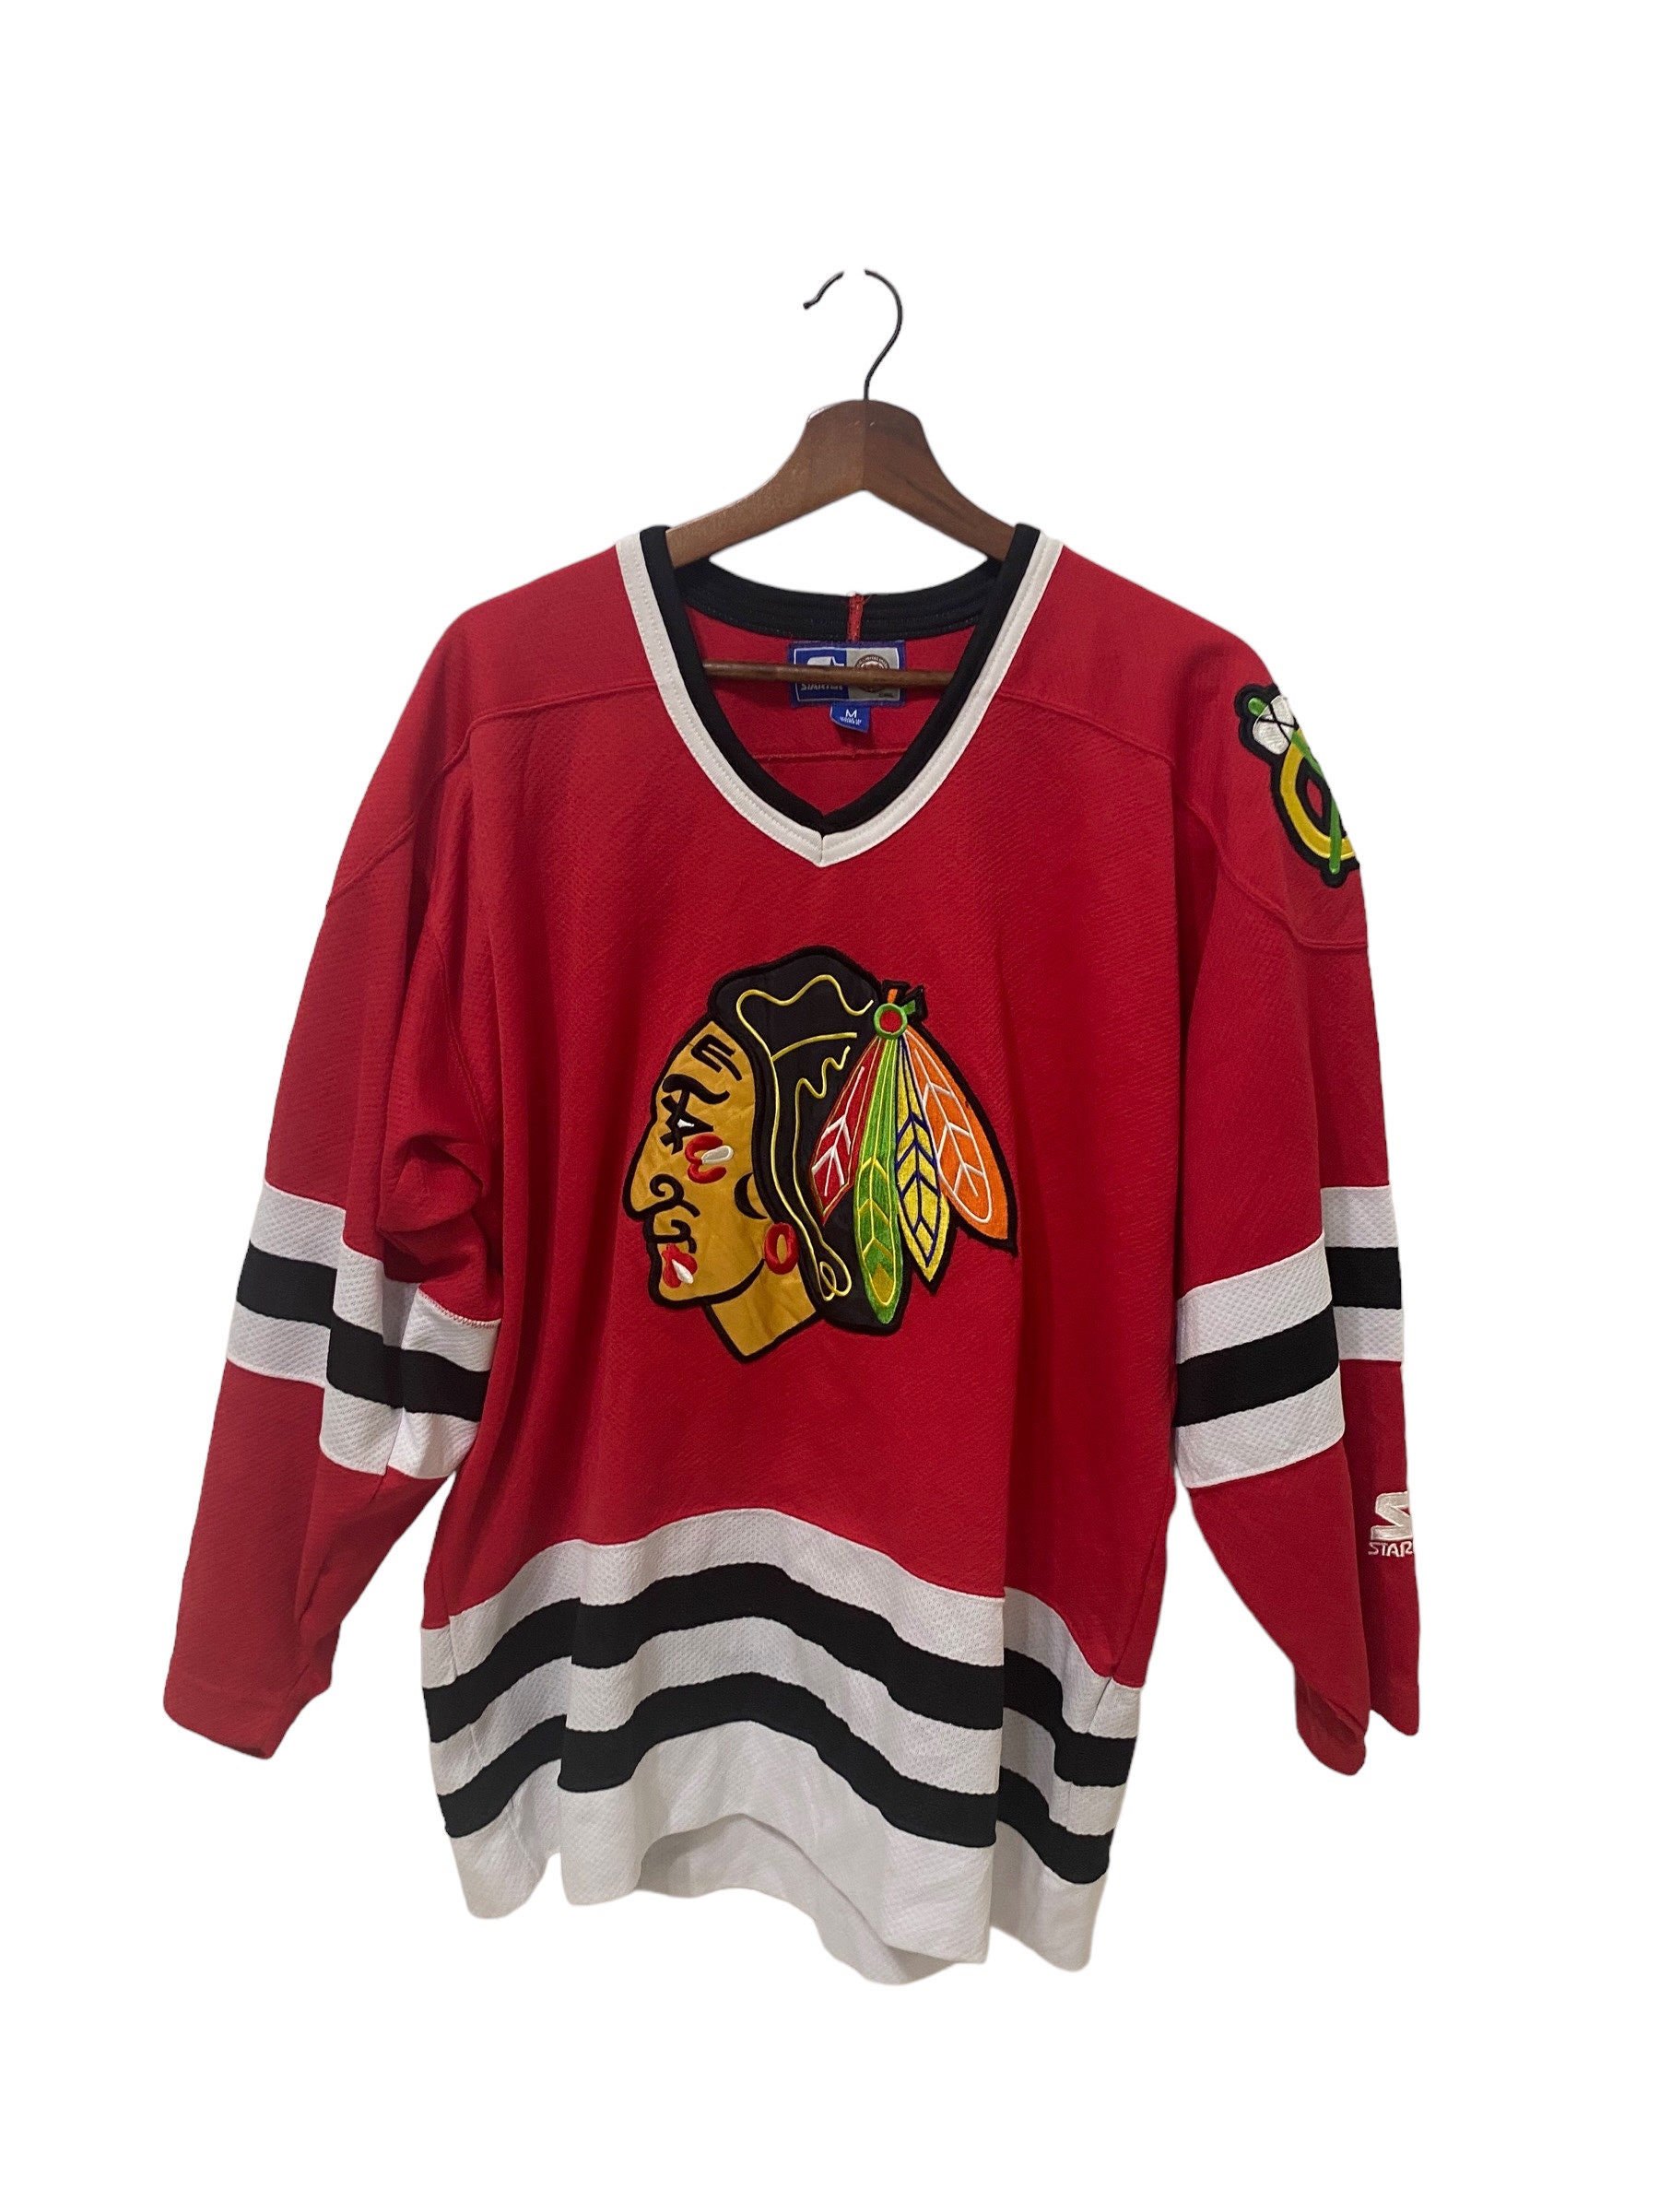 Vintage Starter Chicago Blackhawks NHL Hockey Jersey Adult L Red Sewn blank